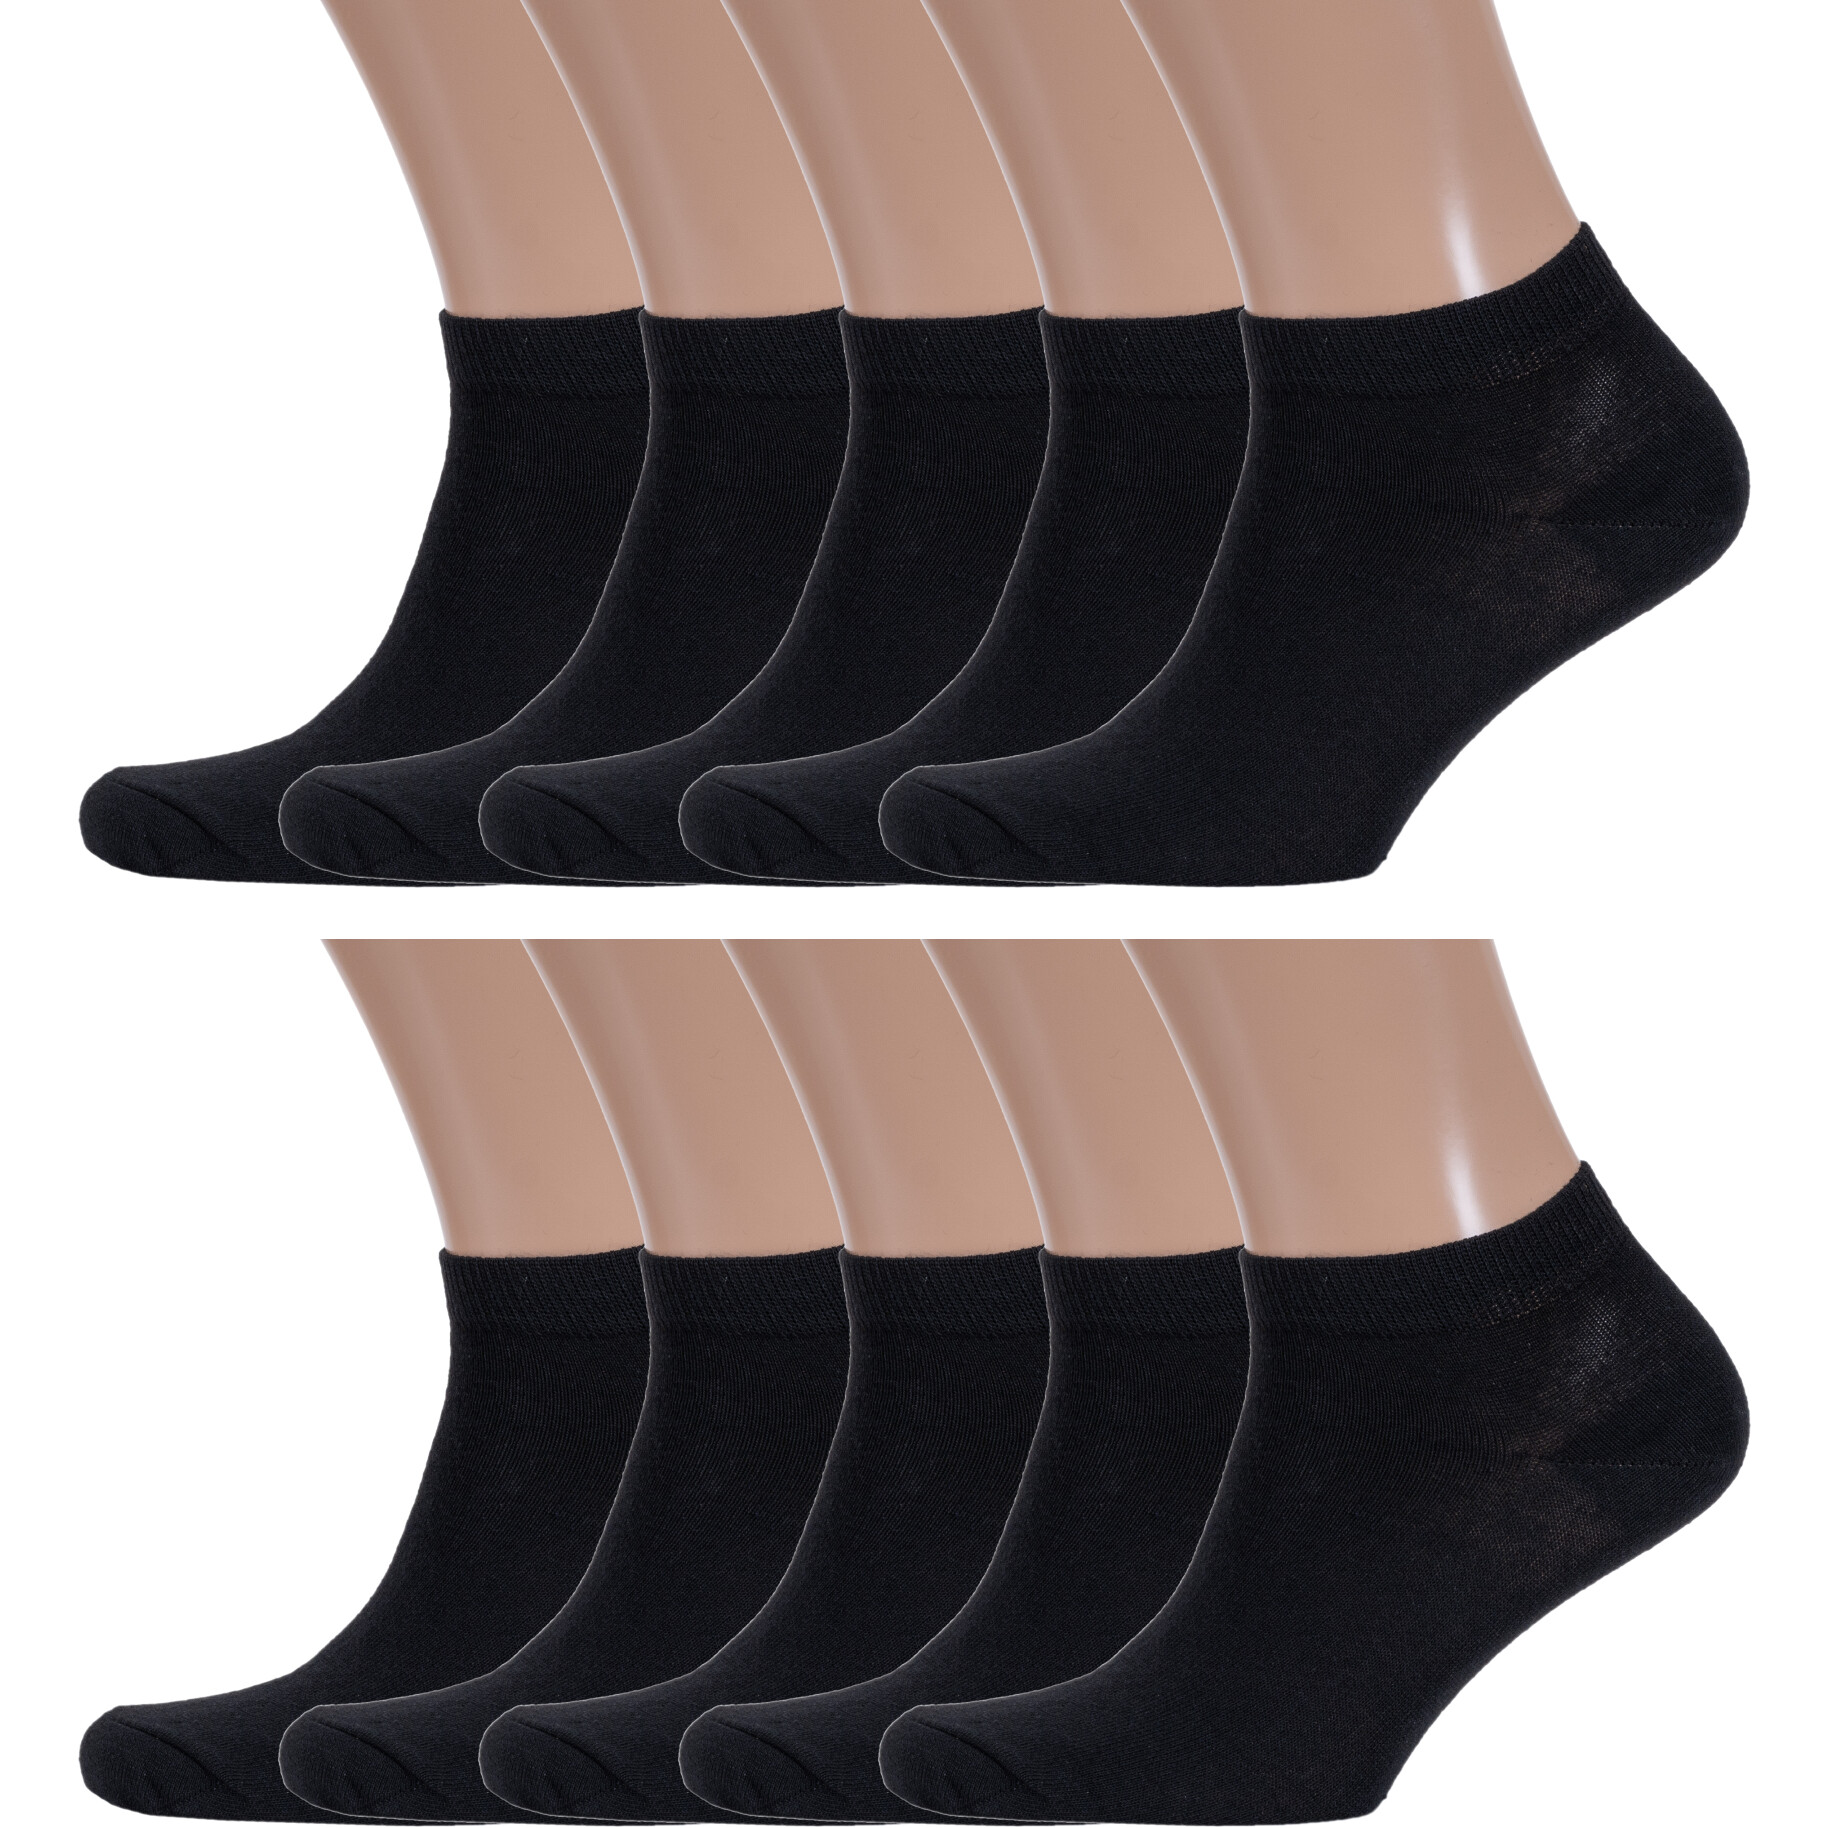 Комплект носков мужских VIRTUOSO 10-YNM-379 черных 25 10 пар